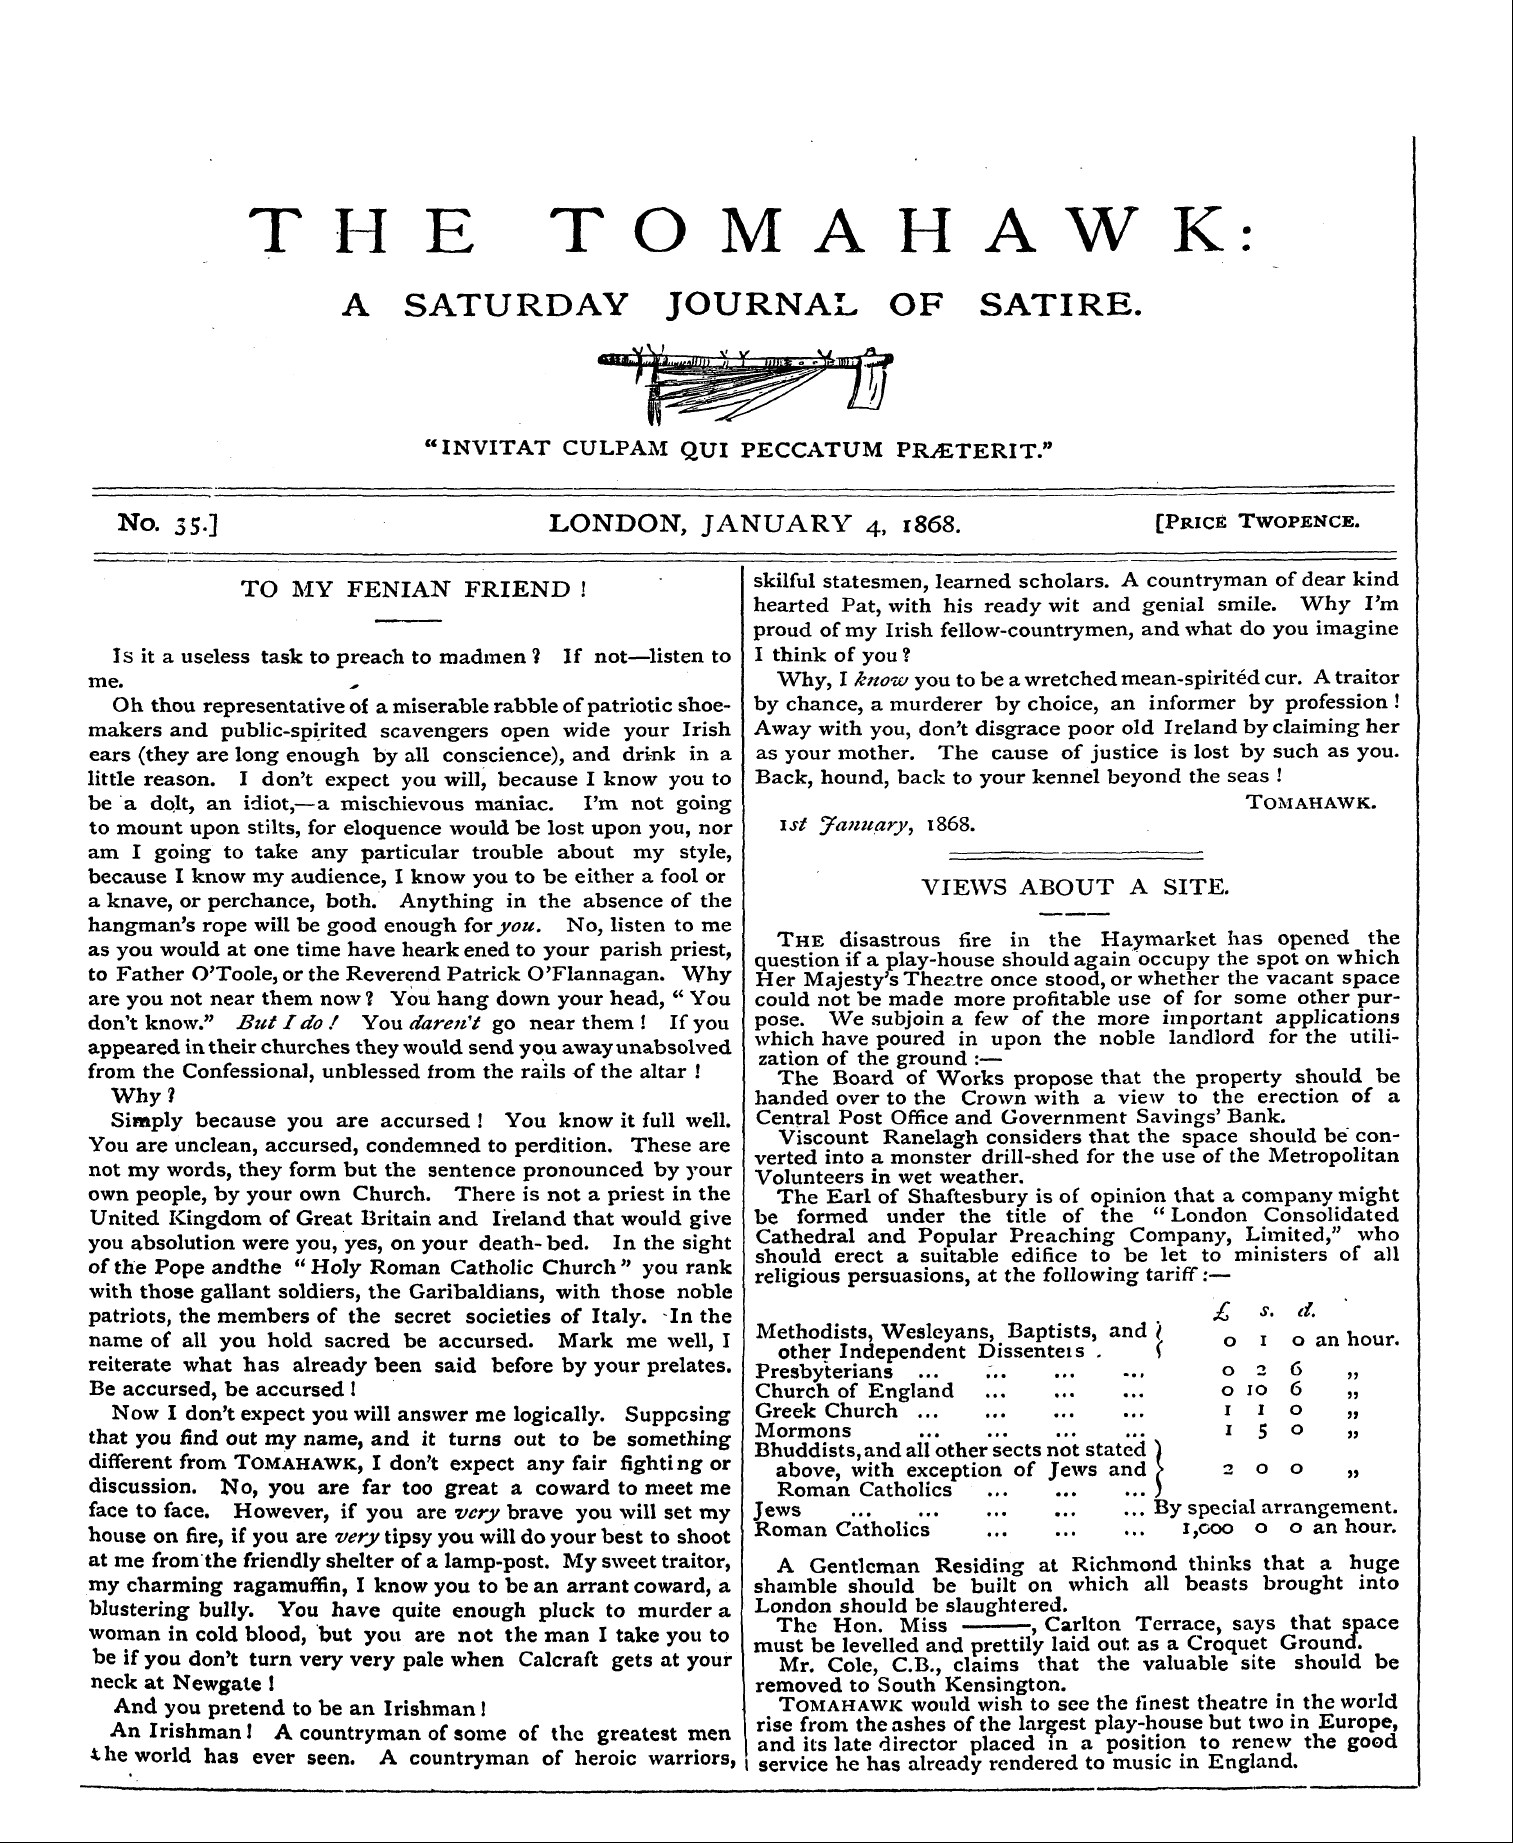 Tomahawk (1867-1870): jS F Y, 1st edition - Views About A Site.